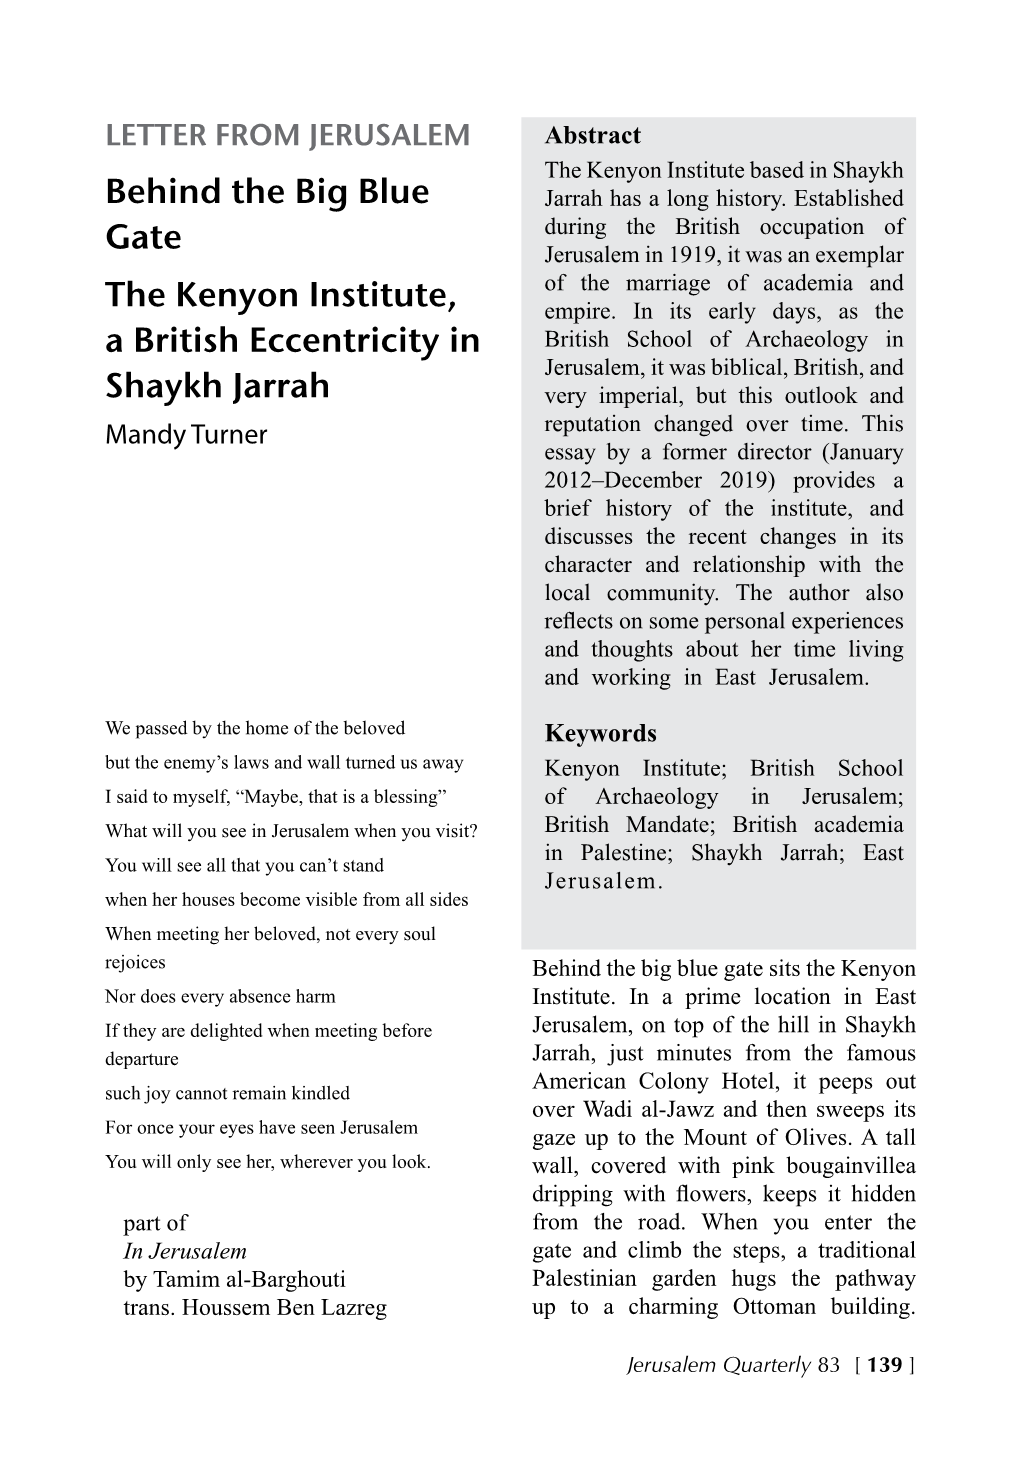 Behind the Big Blue Gate the Kenyon Institute, a British Eccentricity in Shaykh Jarrah